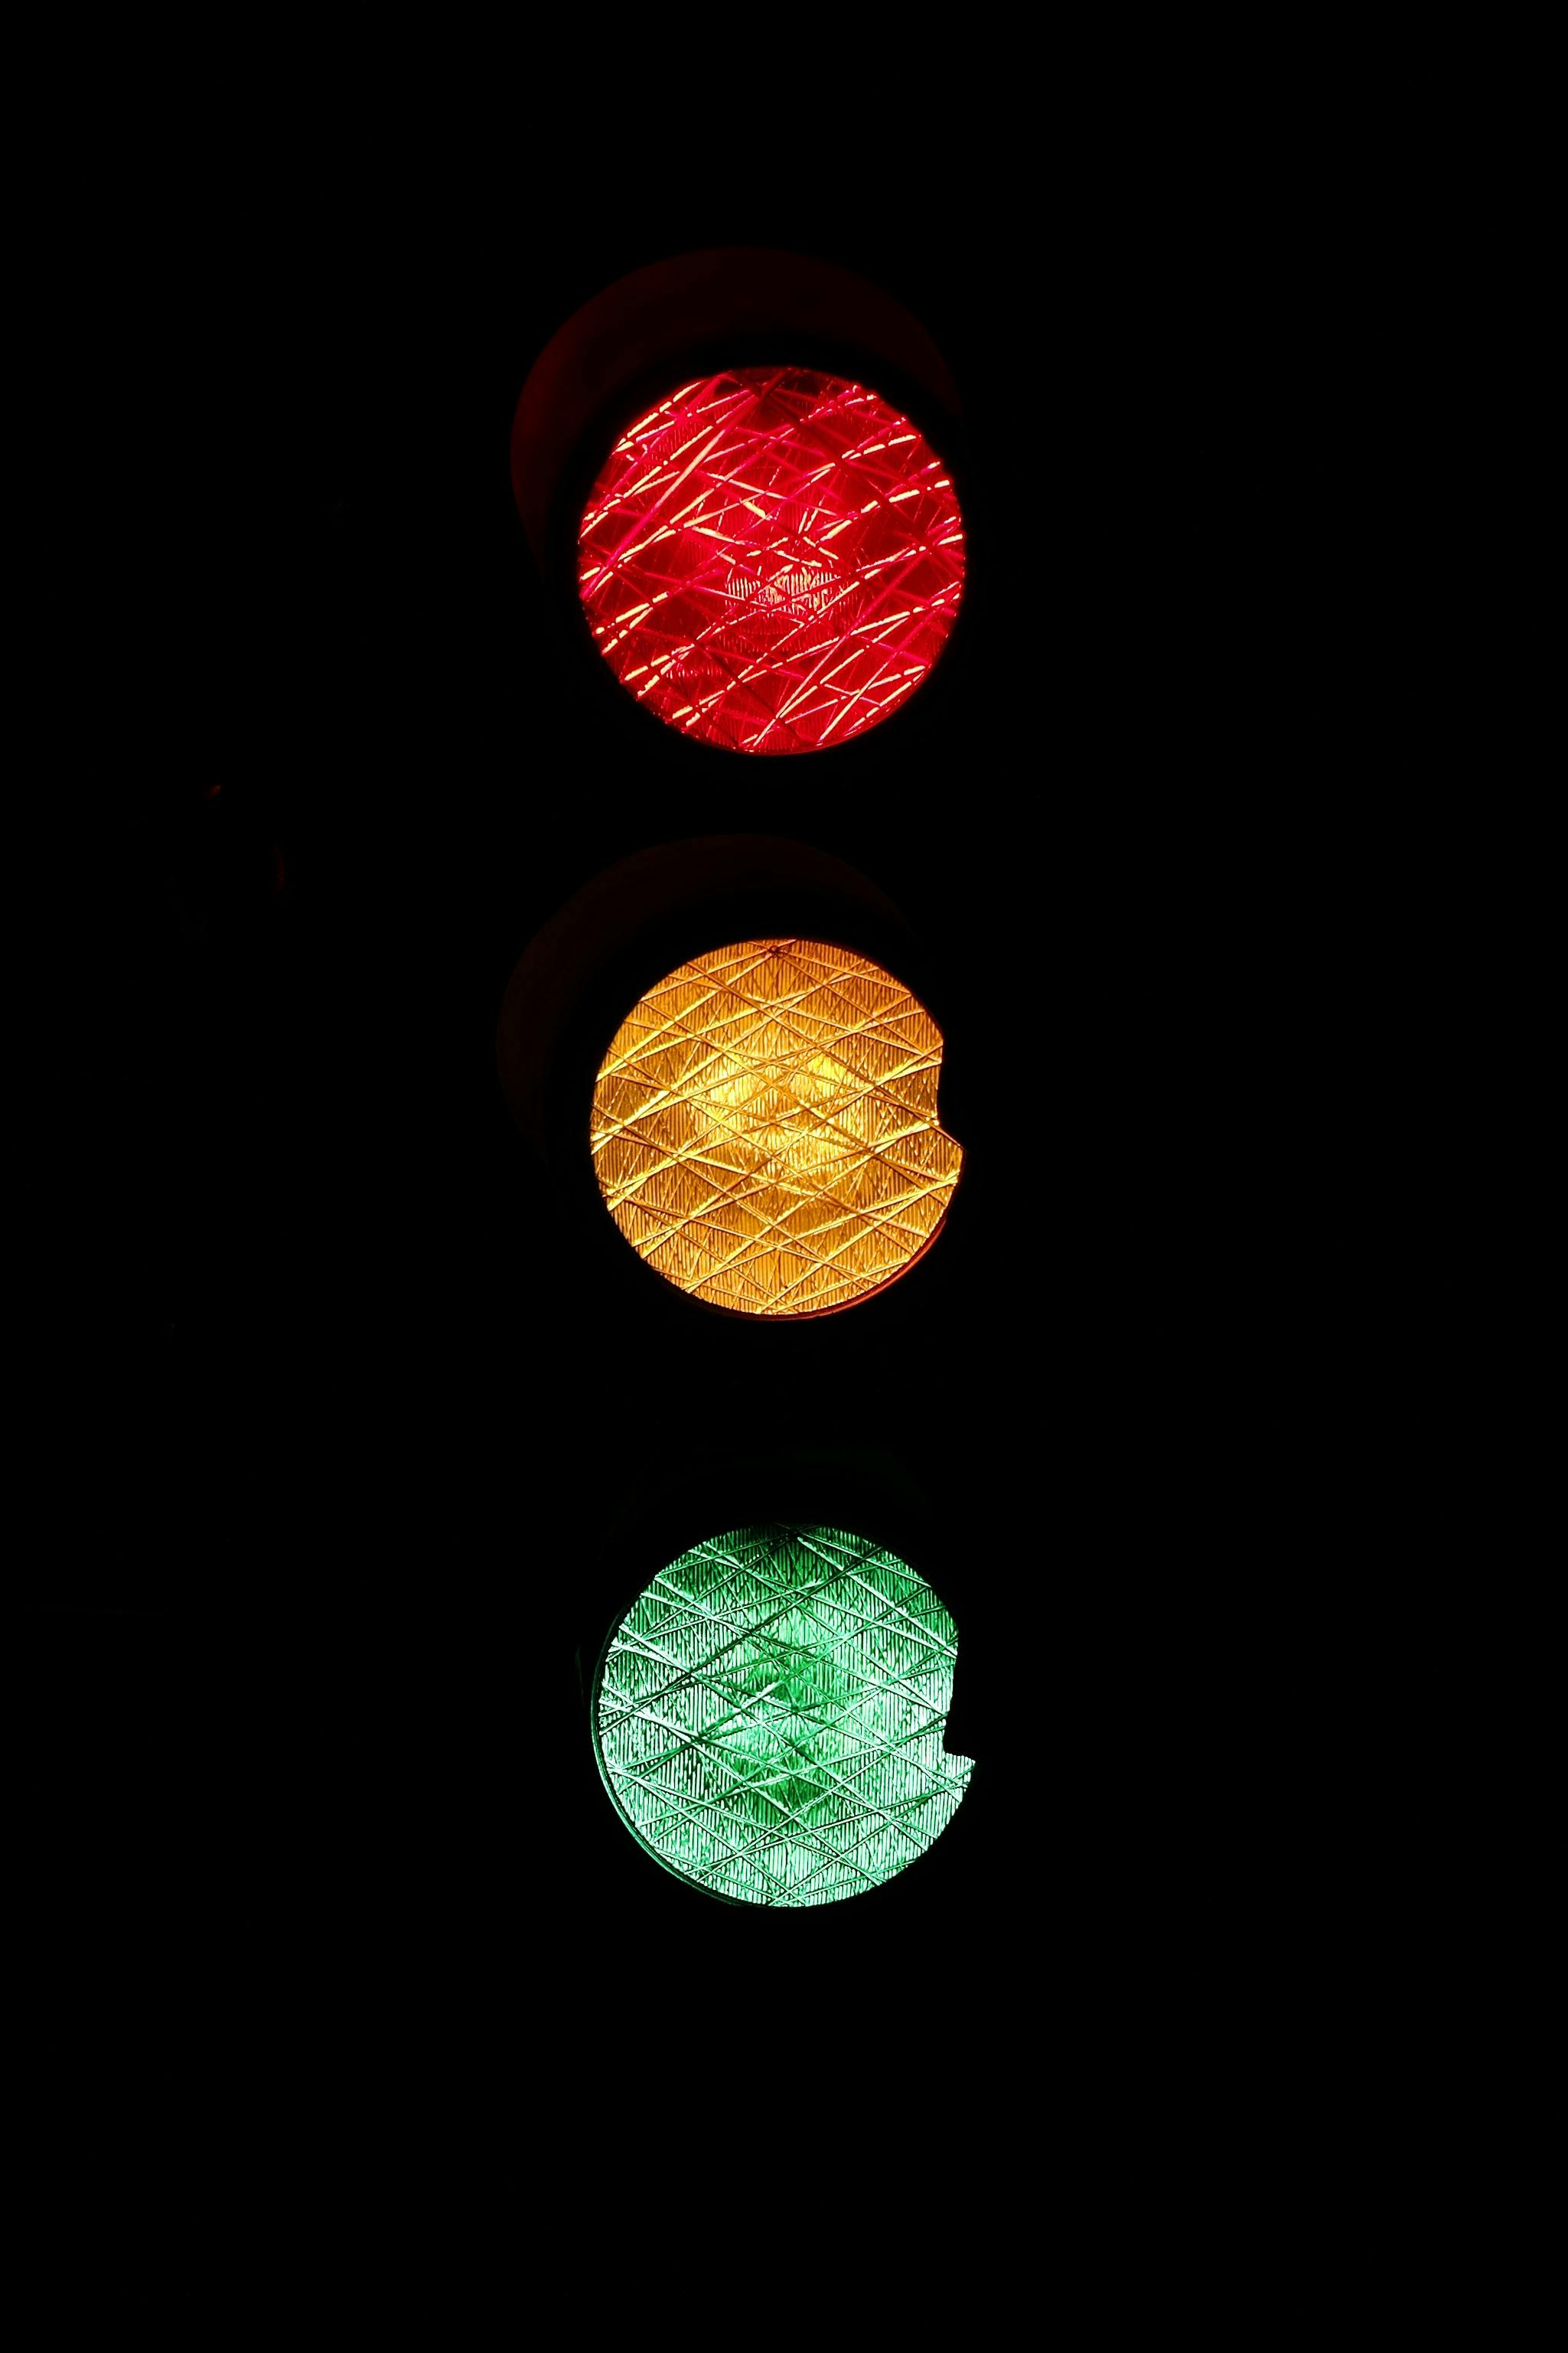 traffic-lights-road-sign-red-yellow-46287.jpeg